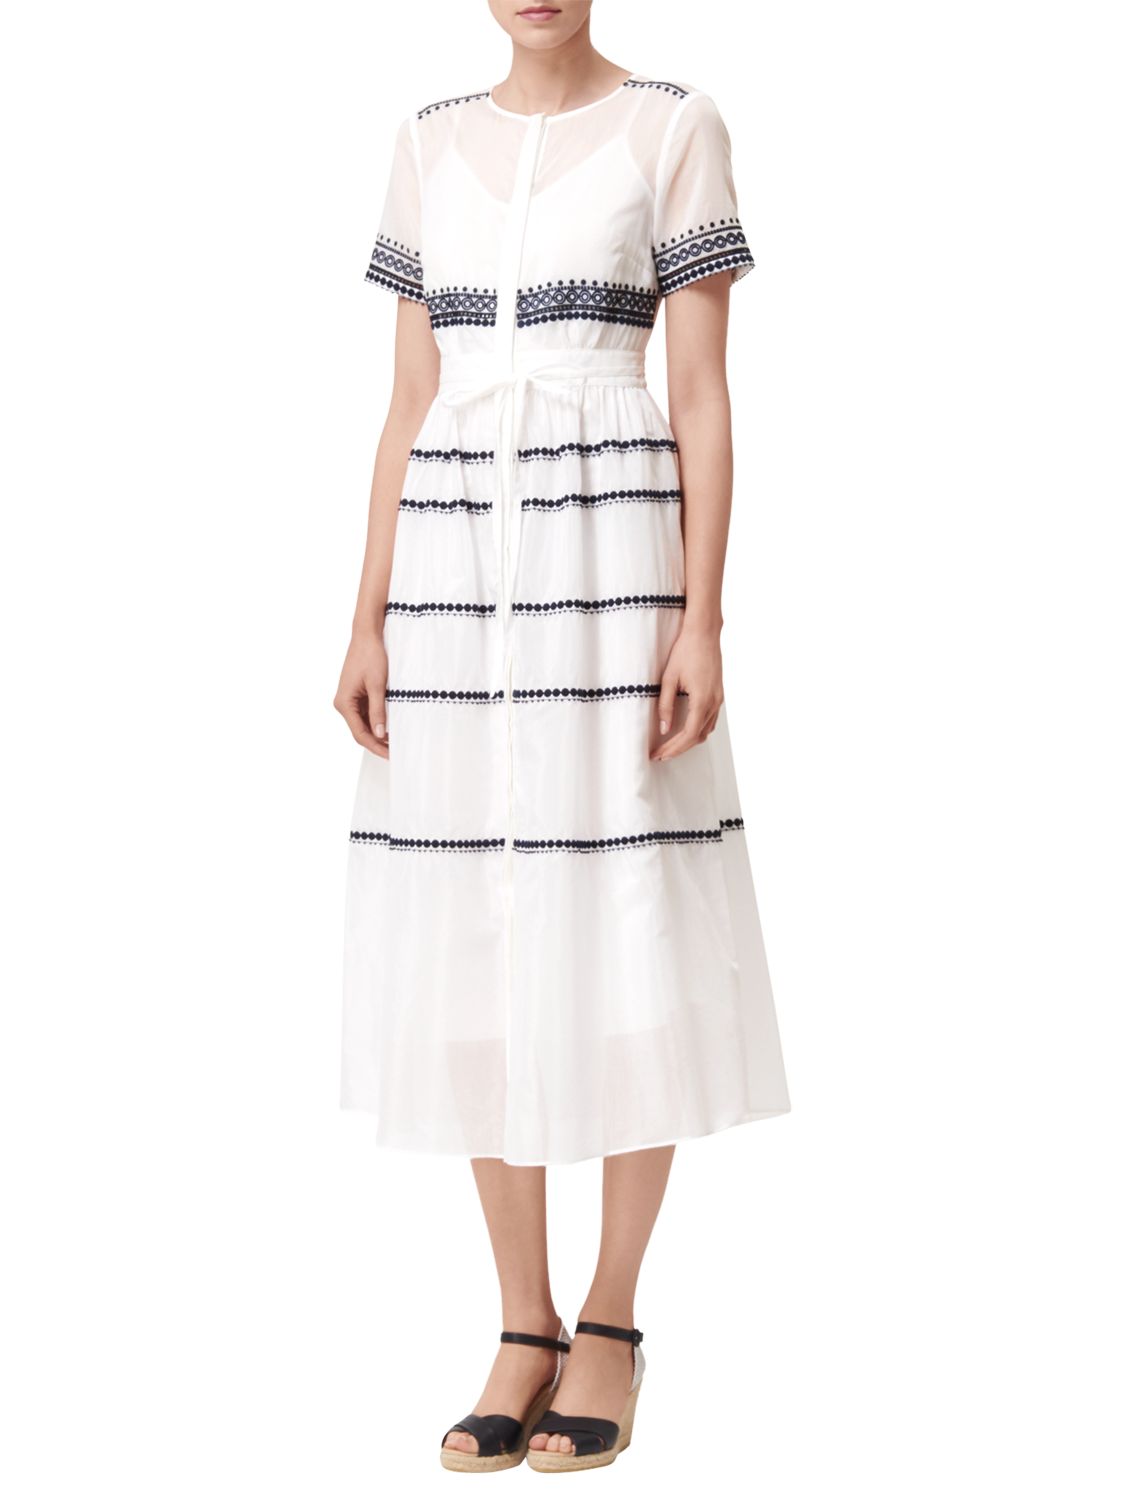 L.K. Bennett Tarley Embroidered Dress, Cream, 12